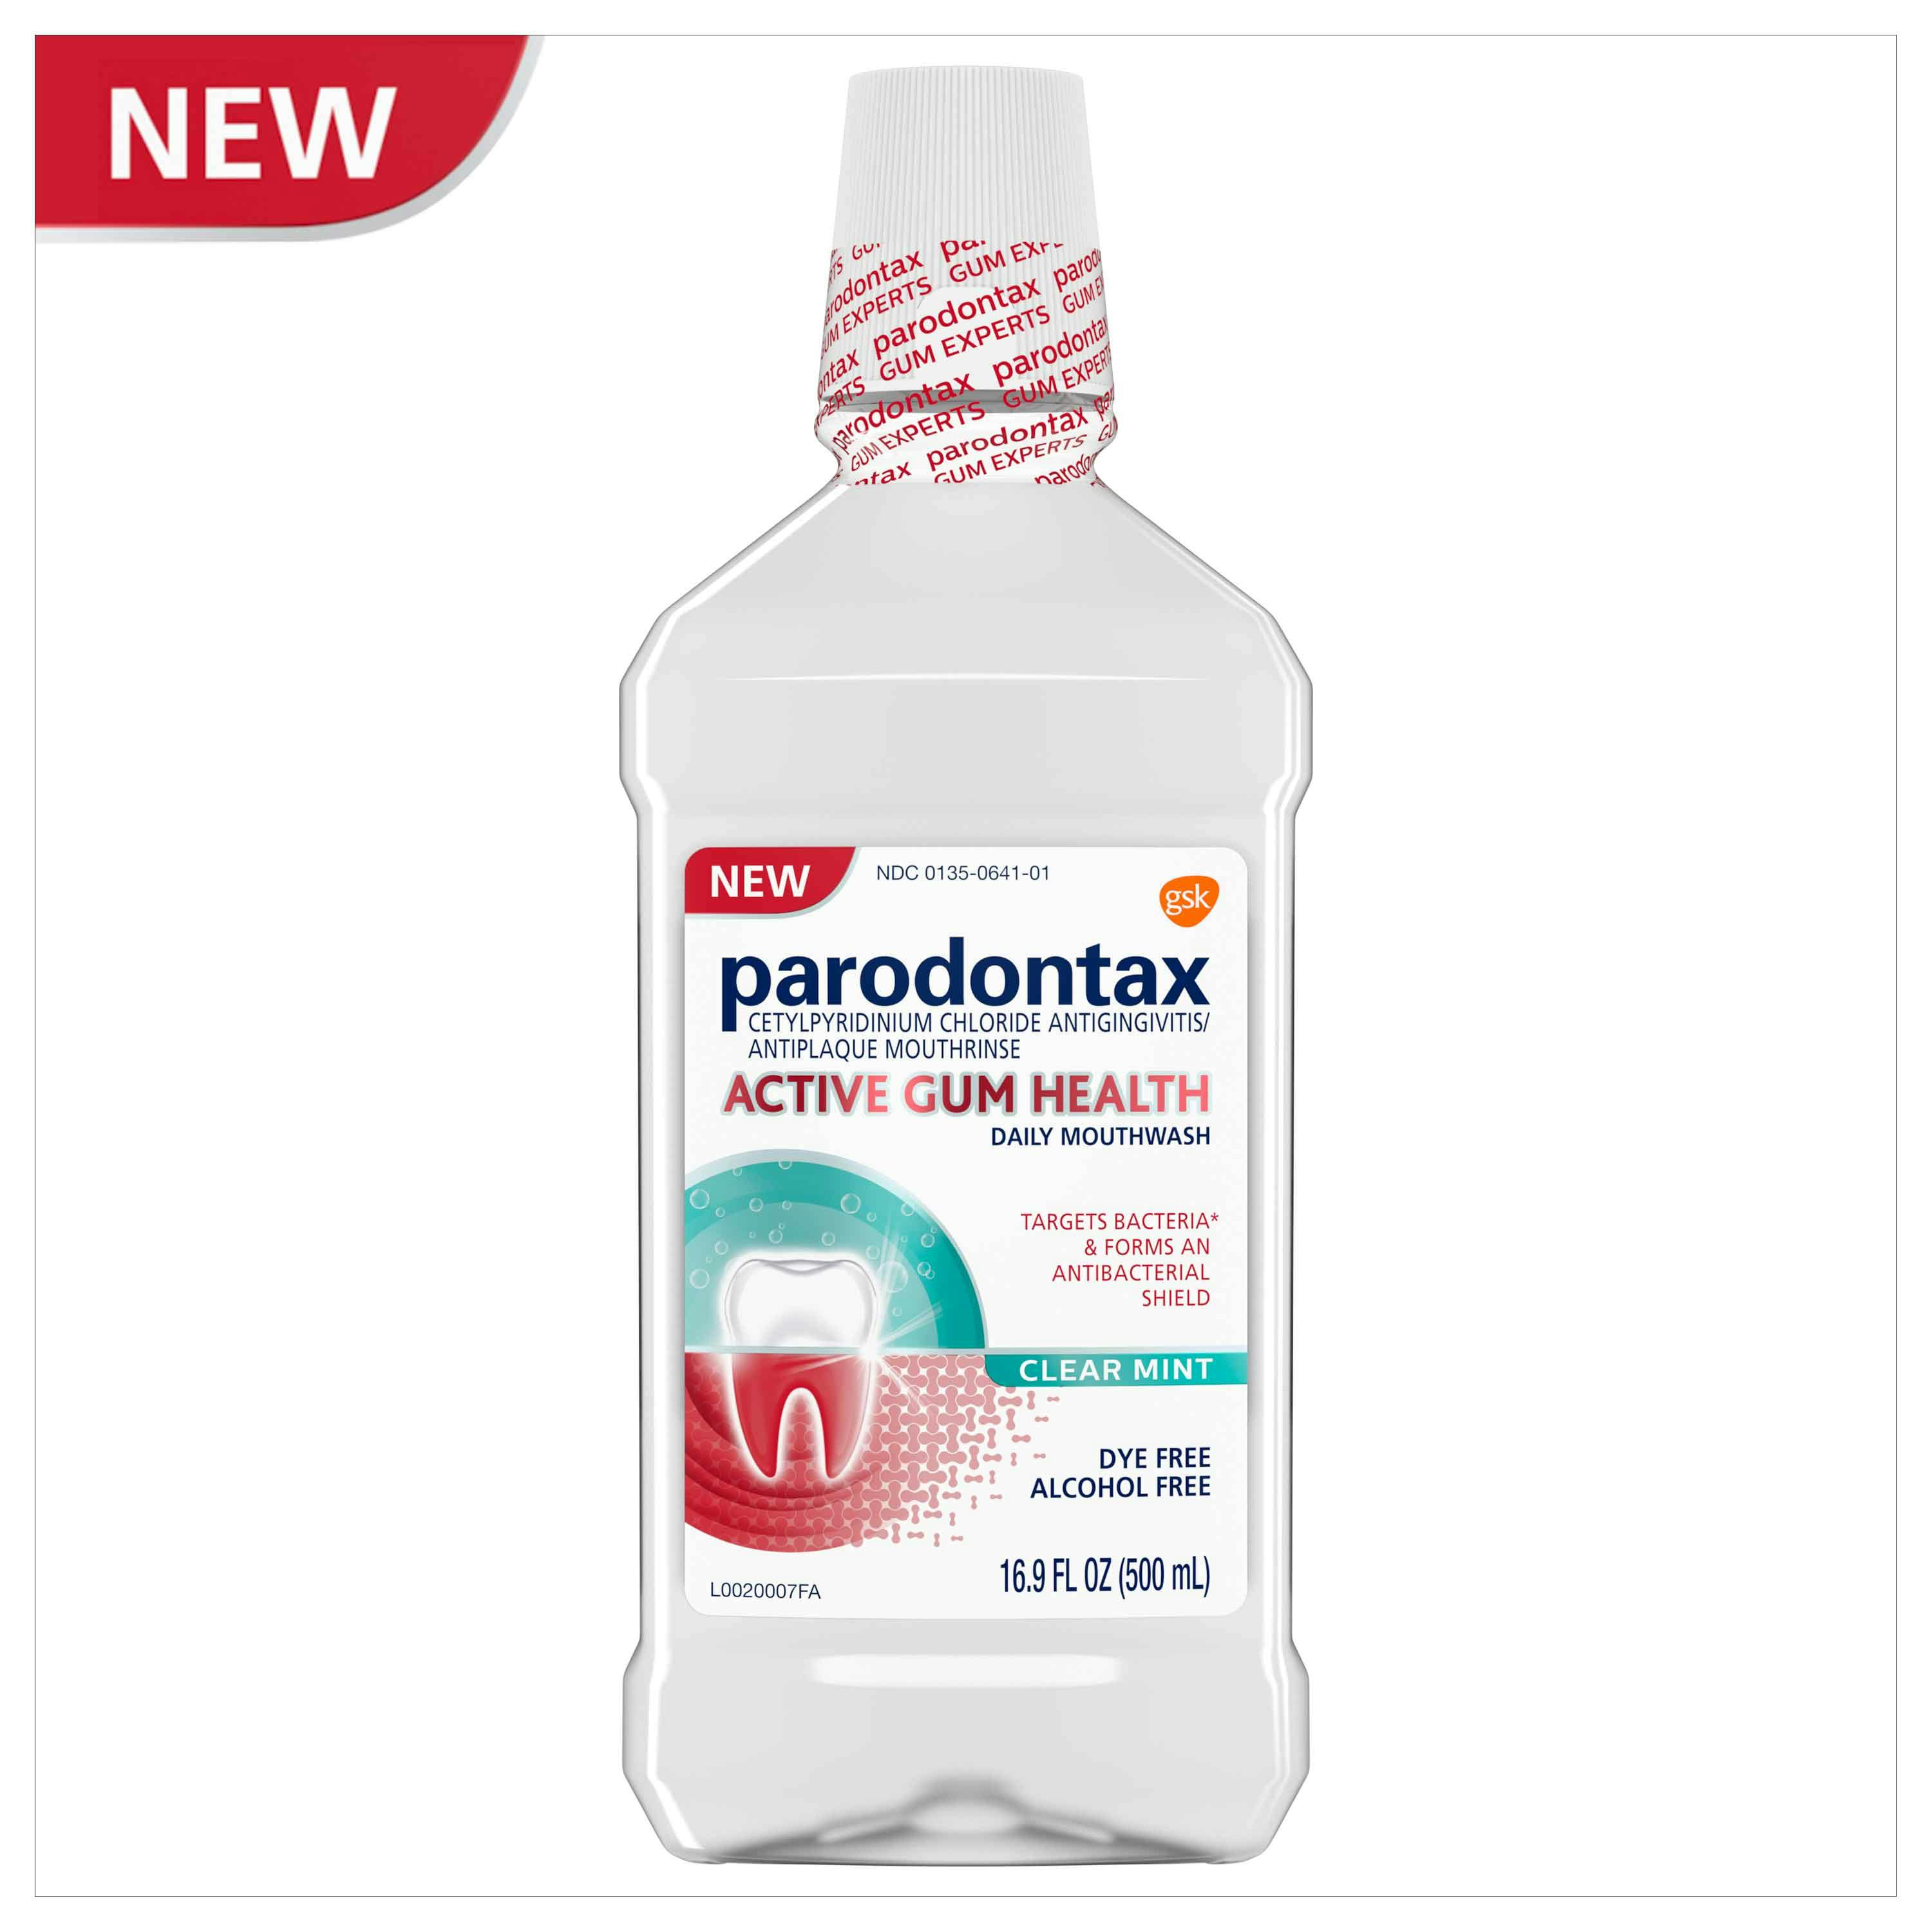 parodontax active gum health clear mint mothwash